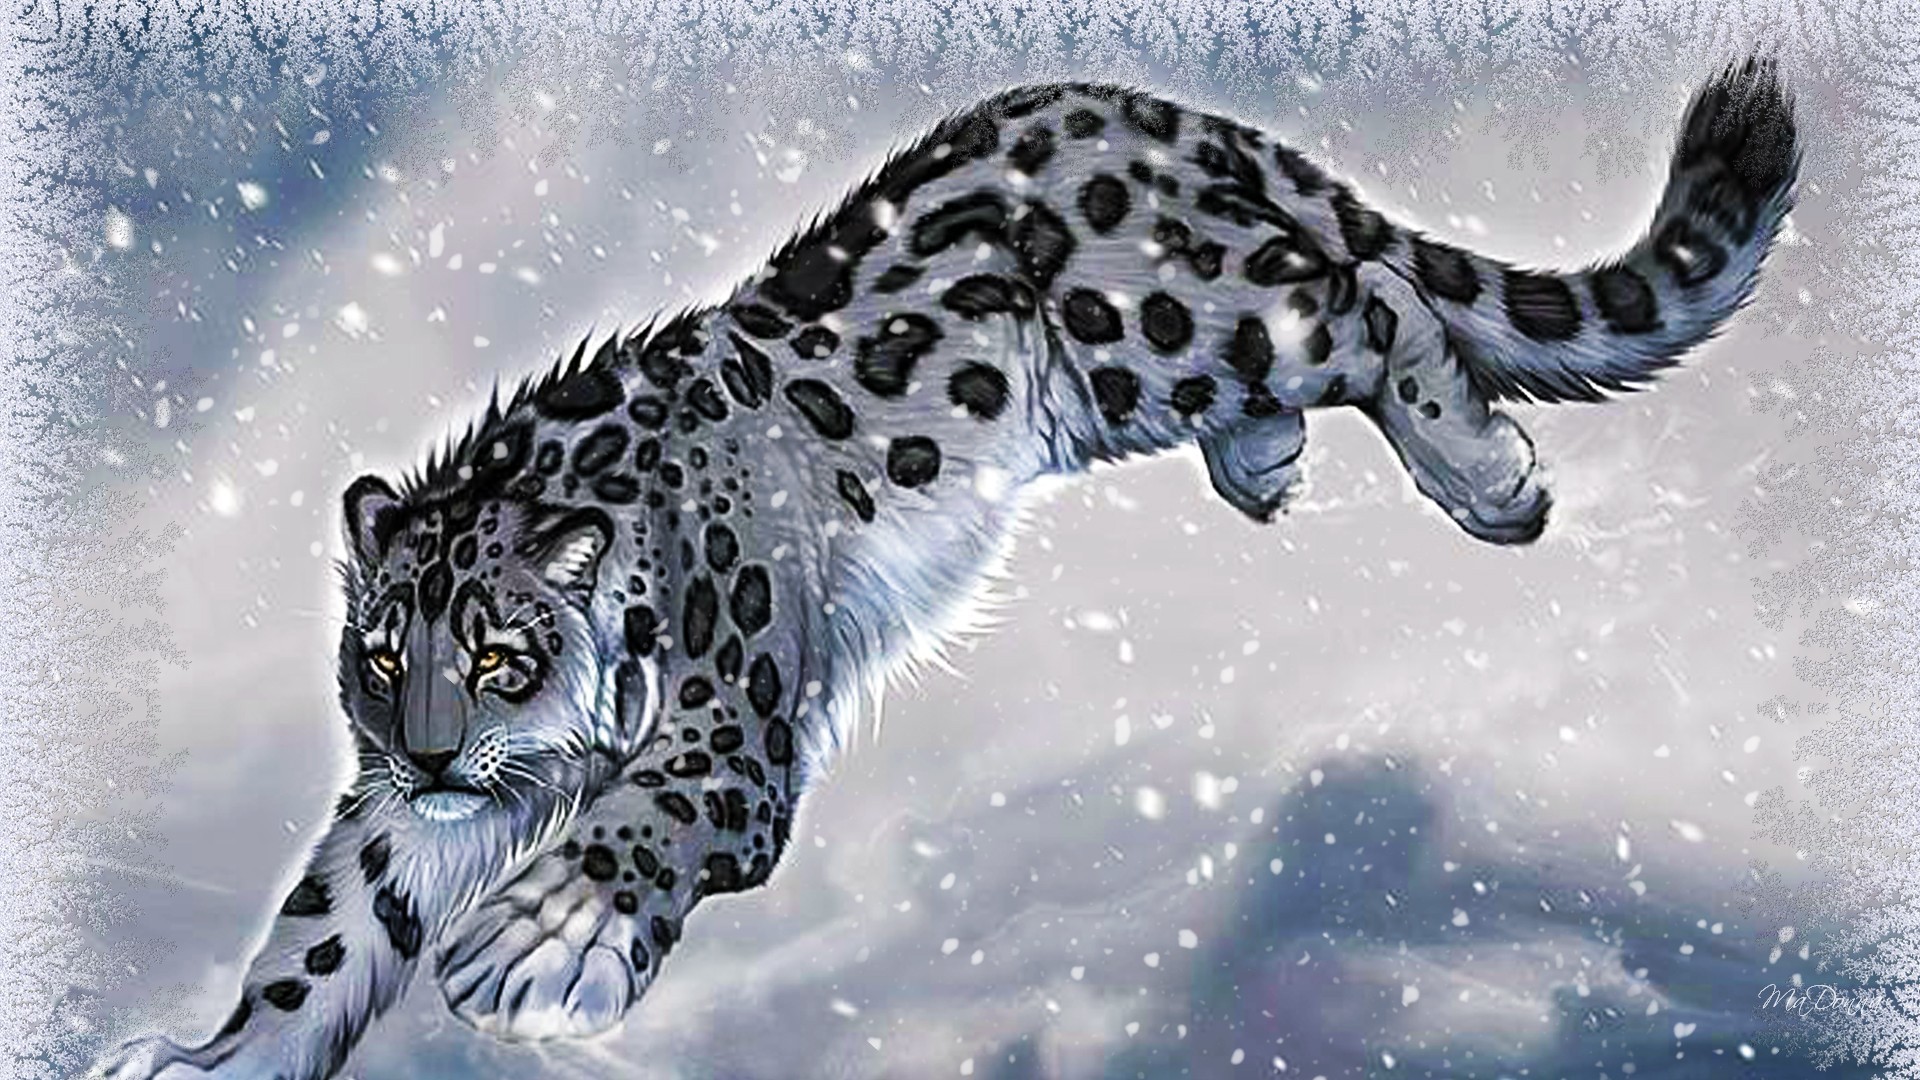 1920x1080 Image - Amazing-animal-snow-leopard-high-resolution-wallpaper -for-desktop-background-download-snow-leopard-images-free.jpg | Animal Jam  Clans Wiki | FANDOM ...